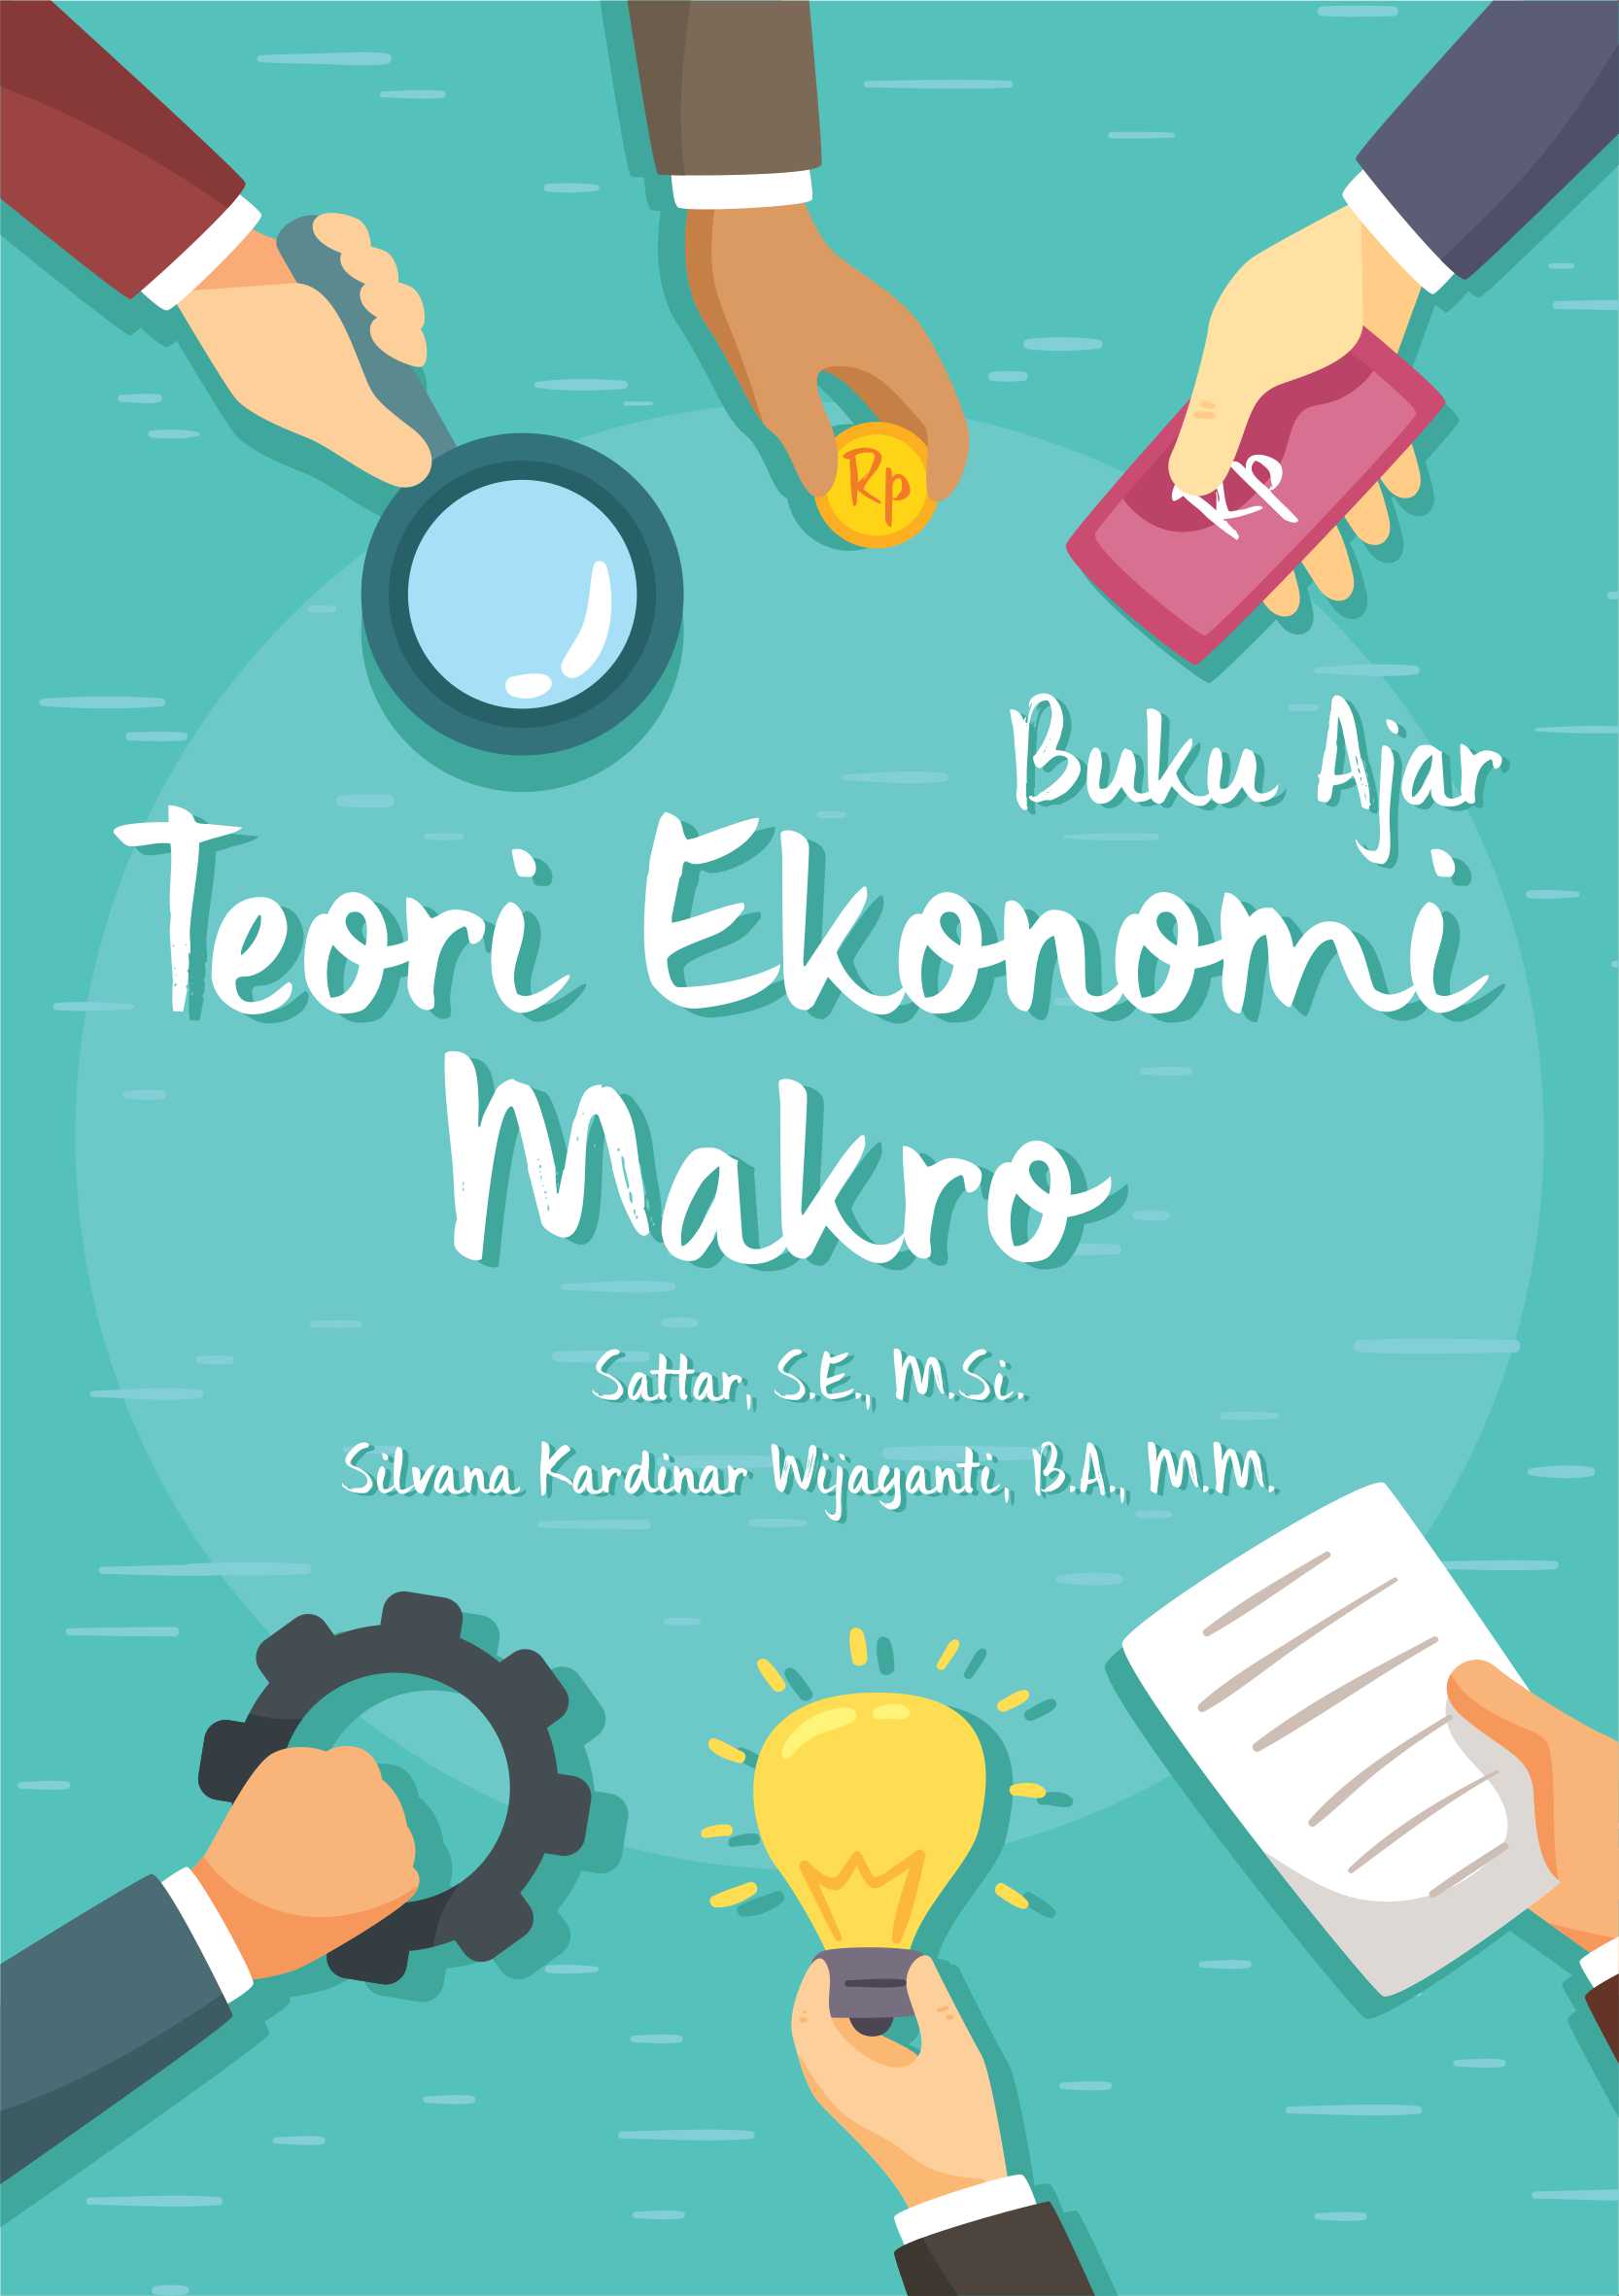 Buku Ajar Teori Ekonomi Makro